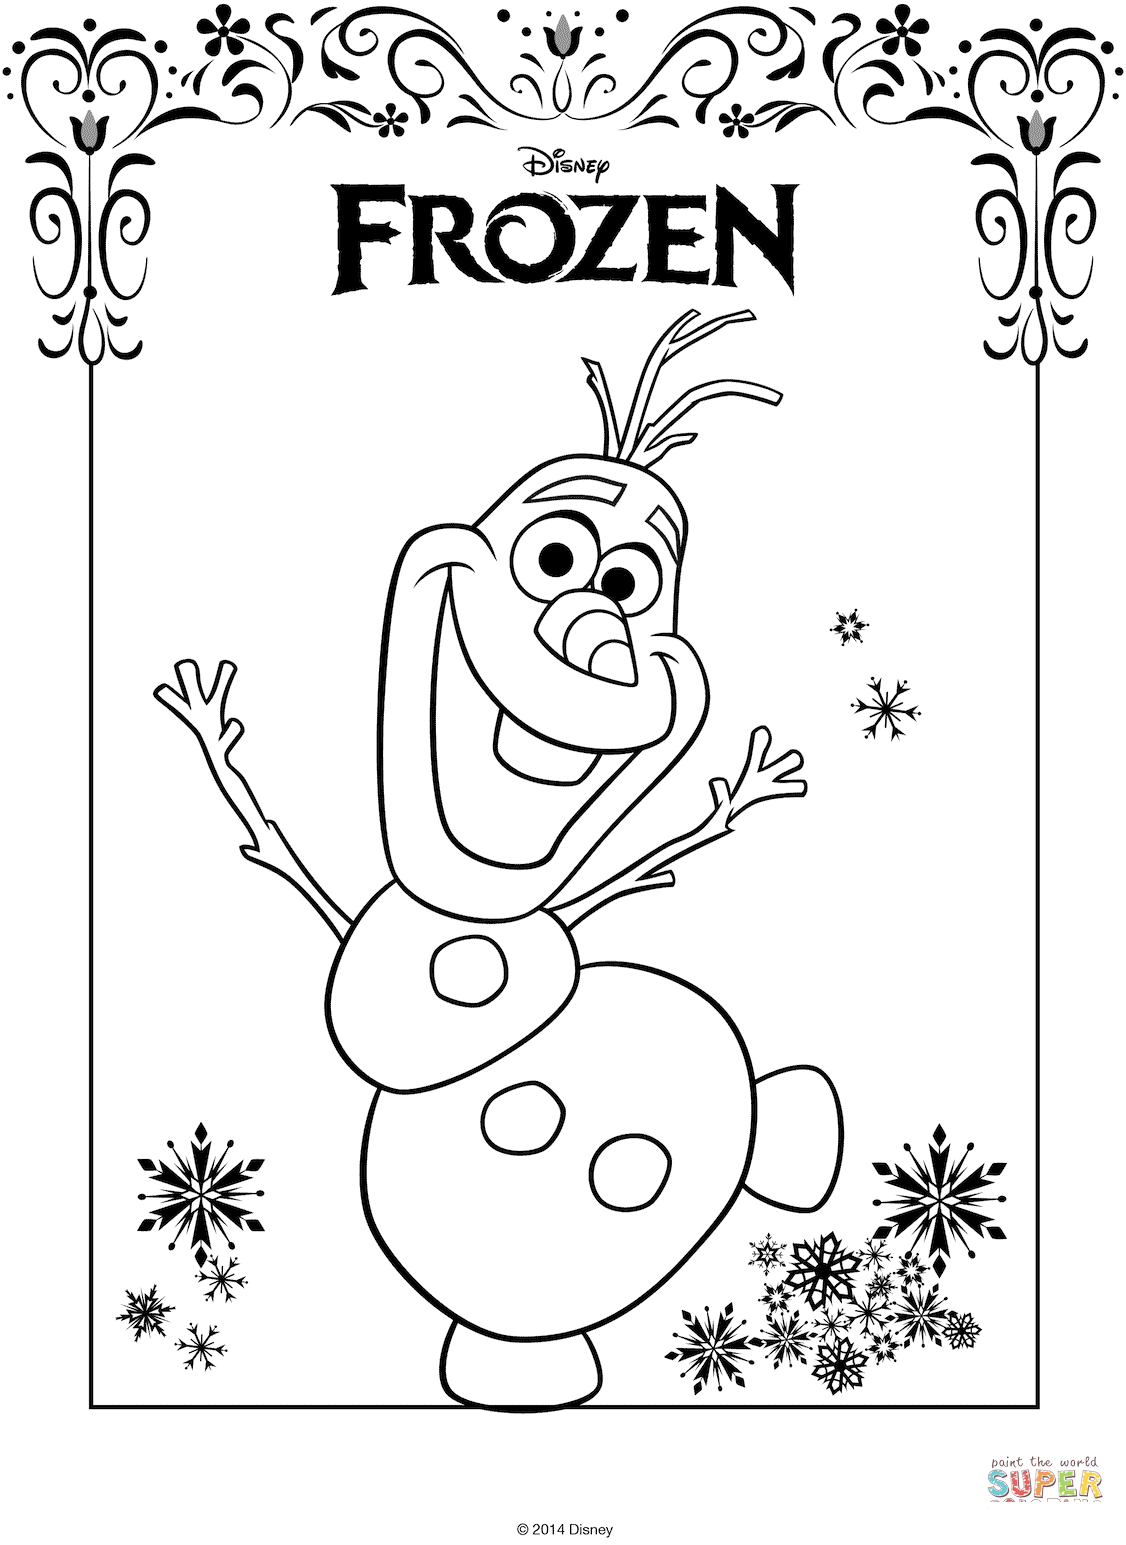 Olaf จาก Frozen